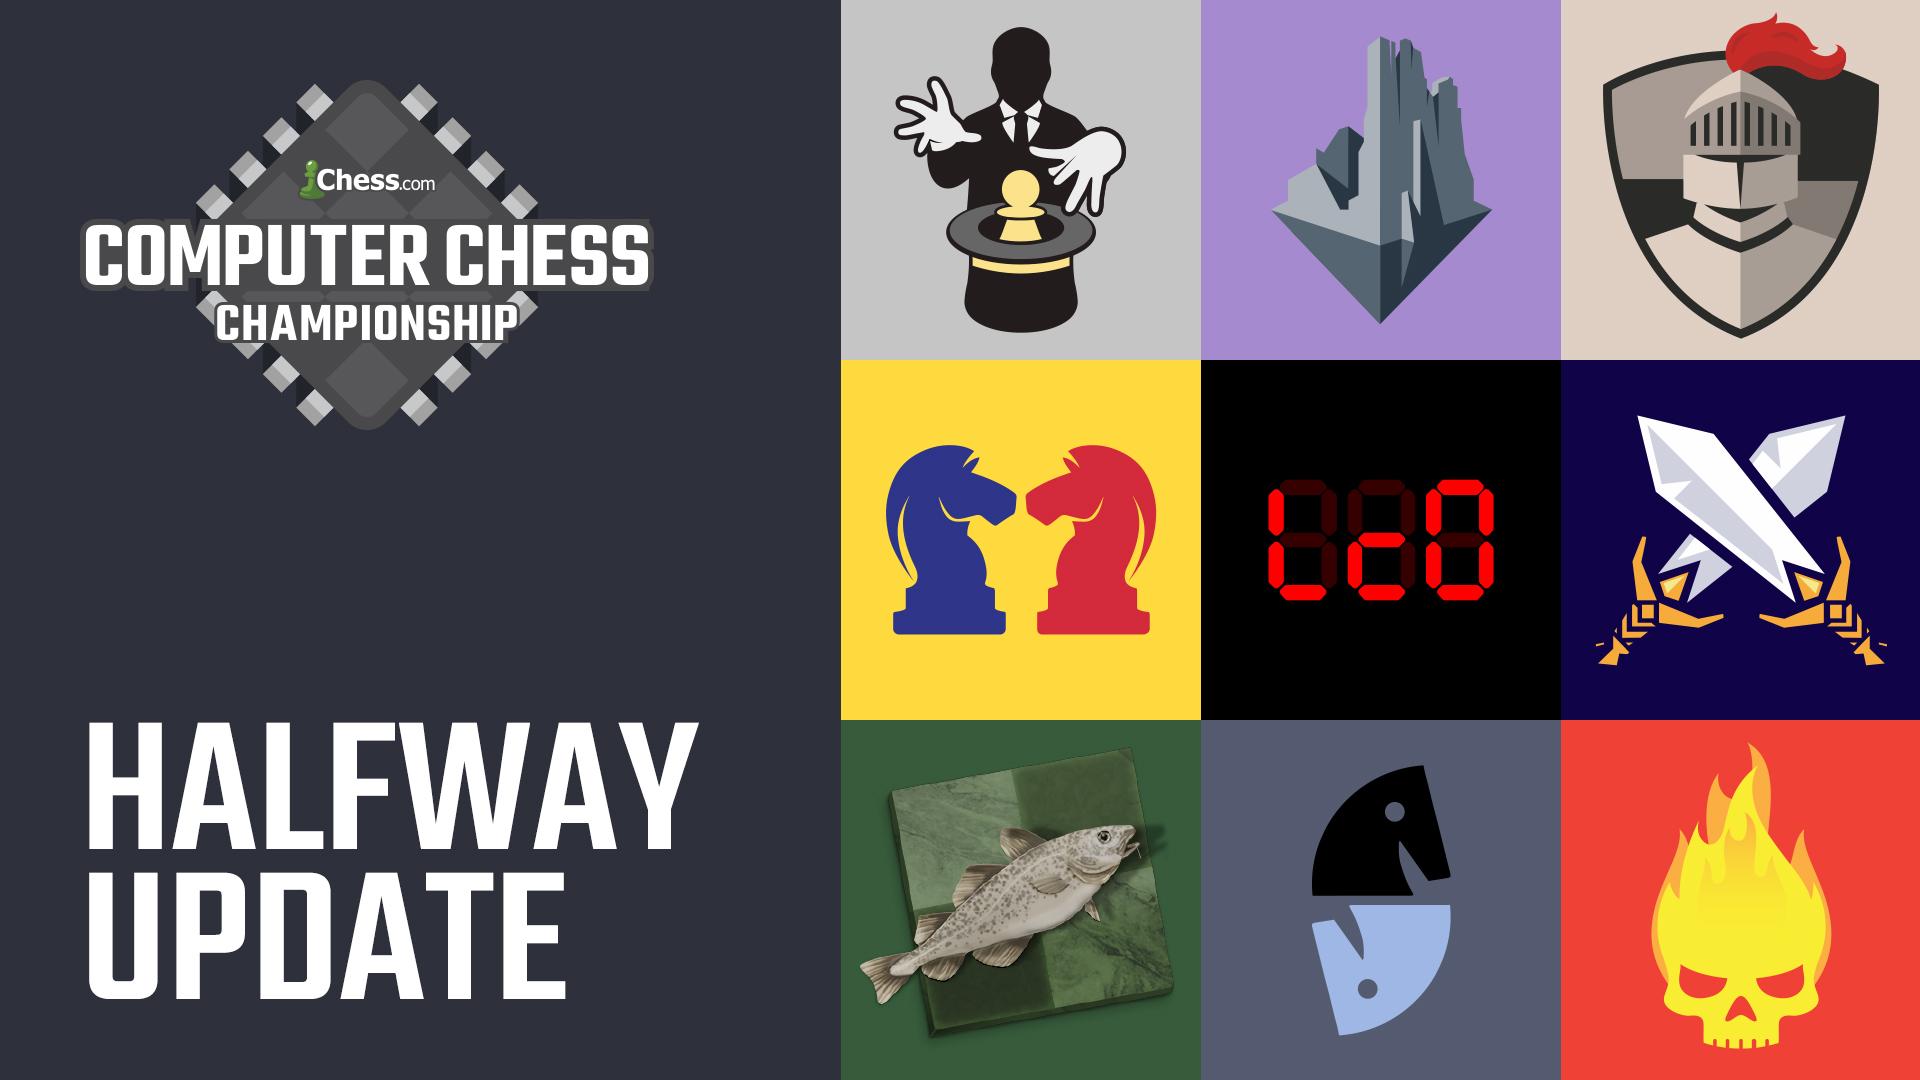 Lc0 Wins Computer Chess Championship, Makes History 